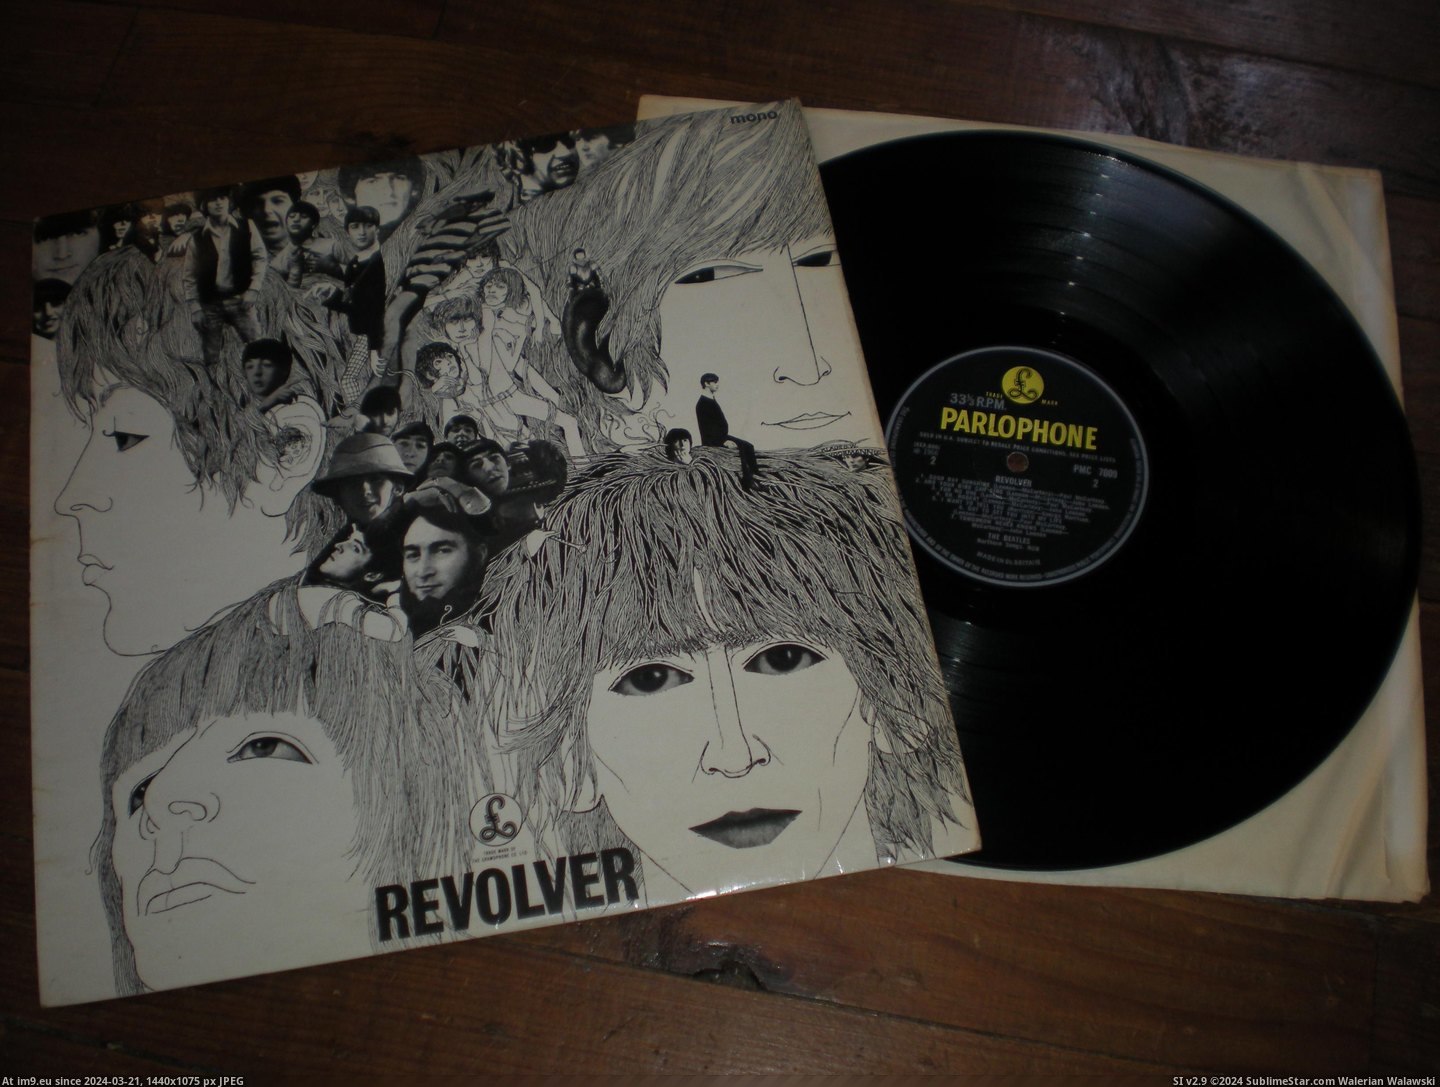  #Revolver  Revolver DR 5 Pic. (Изображение из альбом new 1))